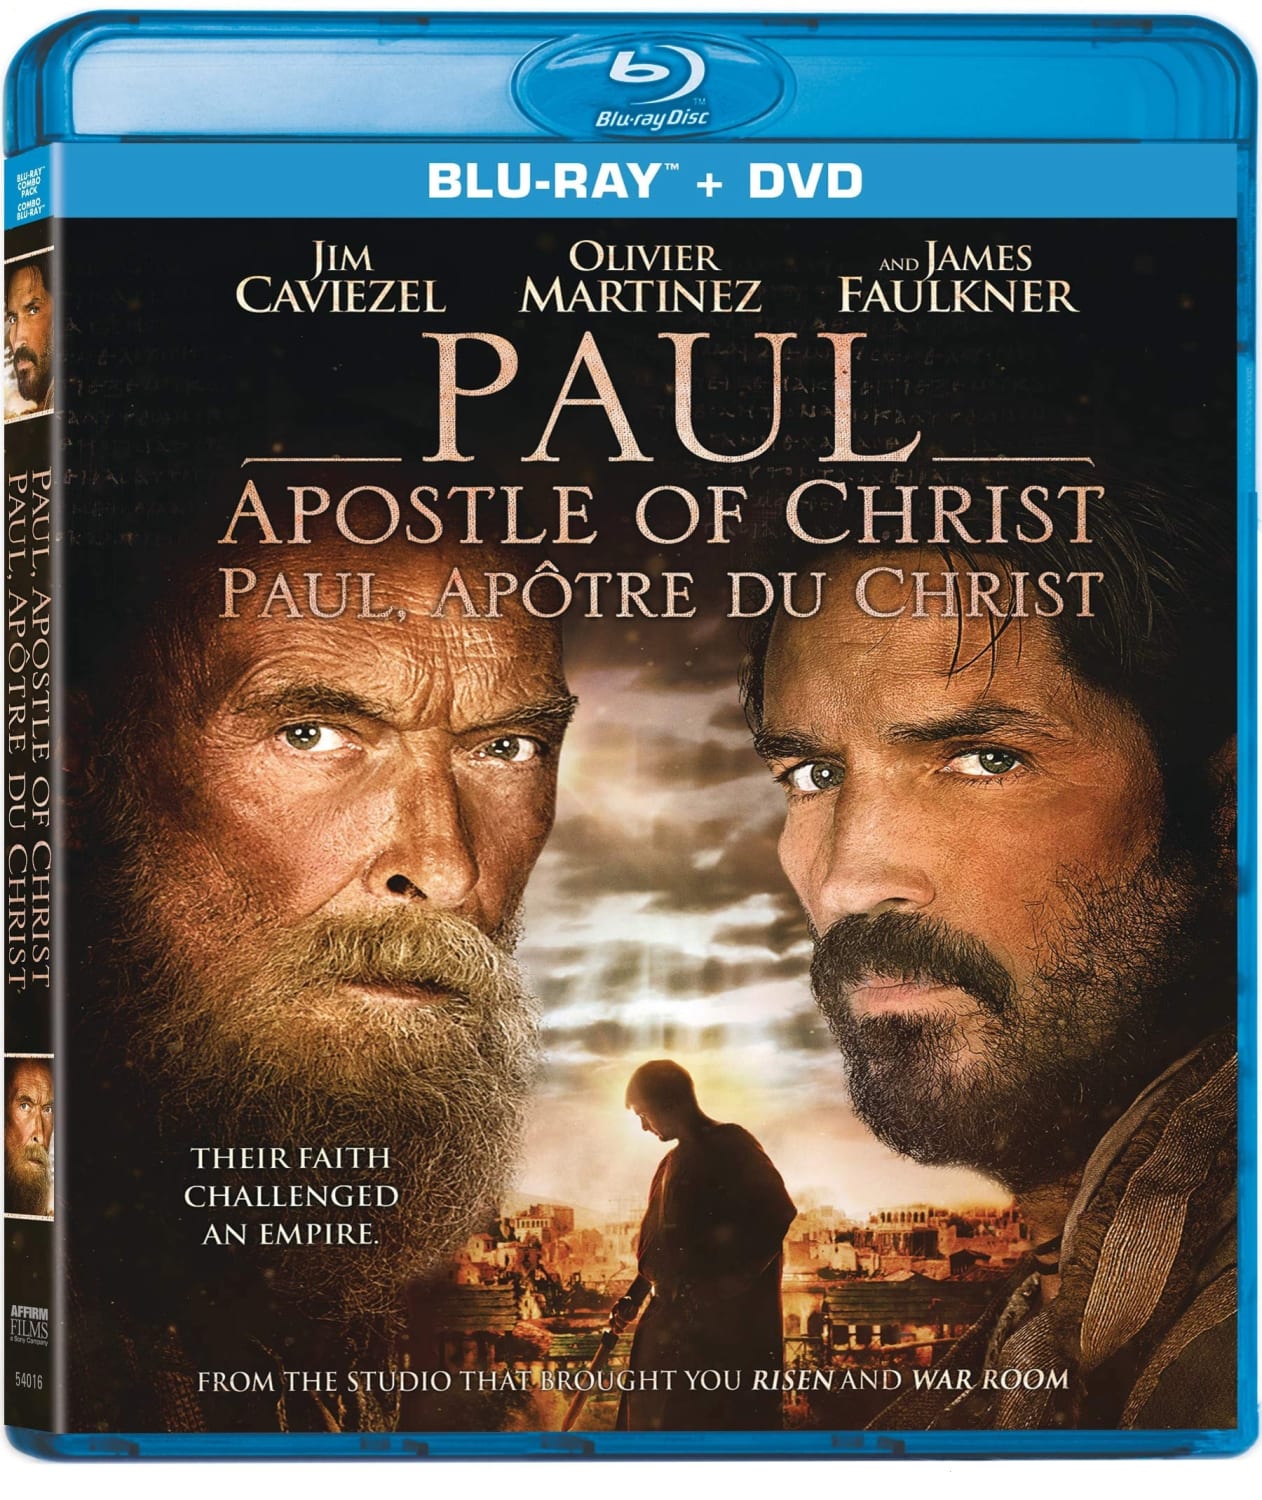 Paul, Apostle of Christ (Blu-ray) on MovieShack